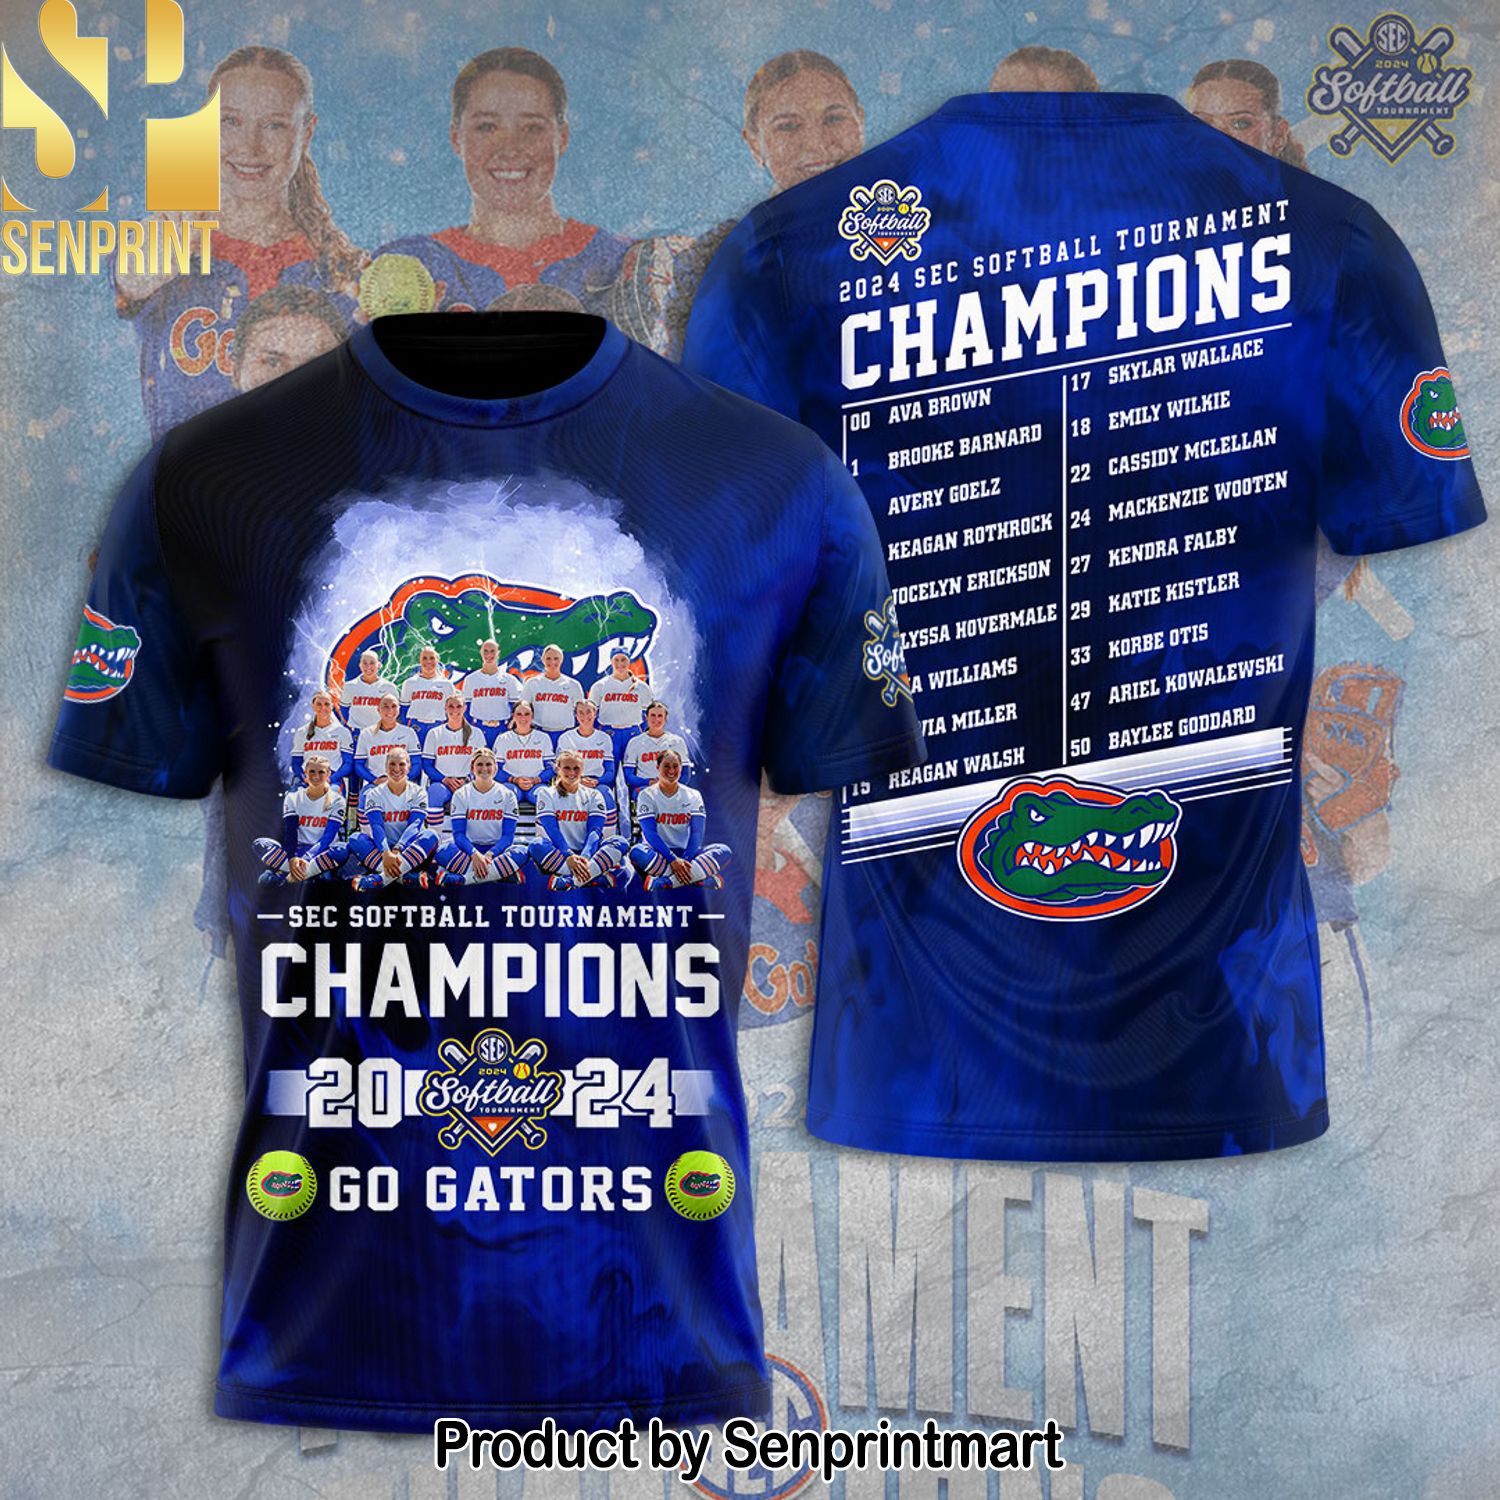 Florida Gators Women’s Softball Full Printing Shirt – SEN0010